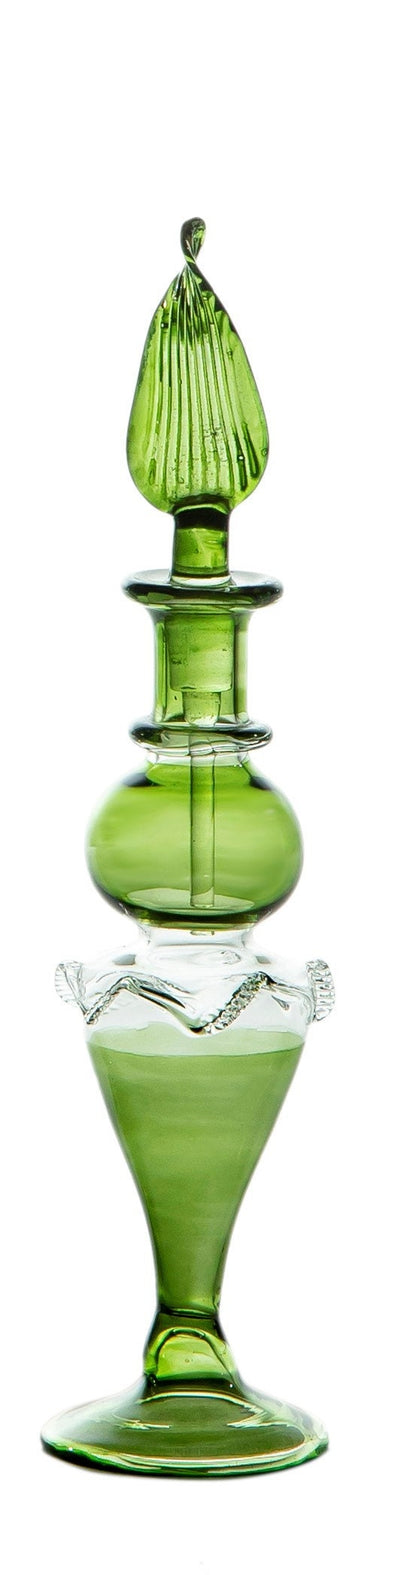 Set of Three Perfume Bottles for Essential Oils - Les Trois Pyramides